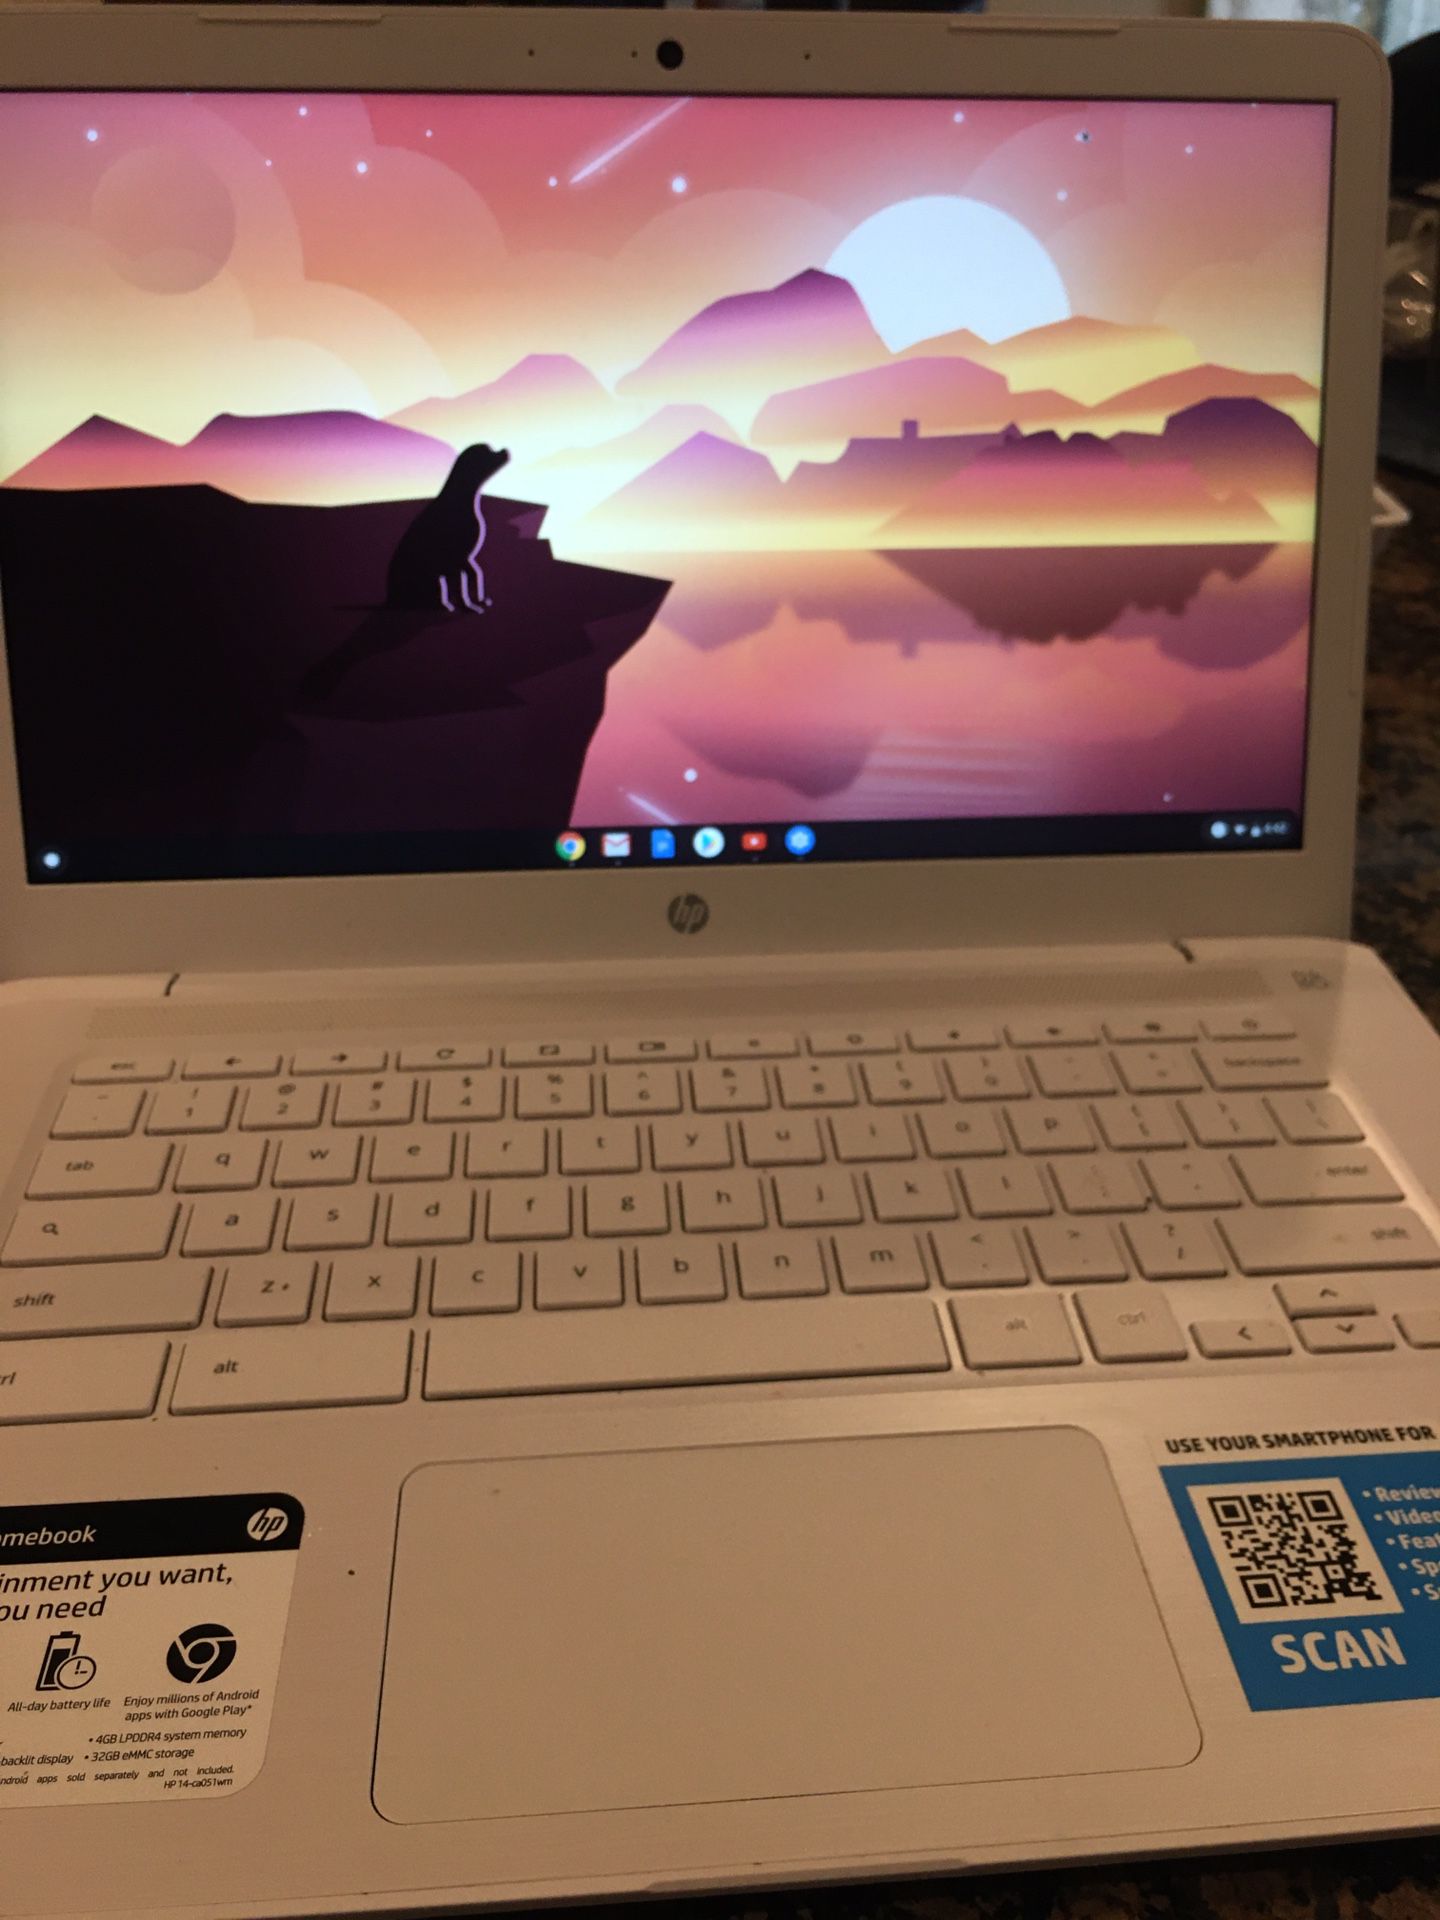 HP Chromebook 14-inch Laptop